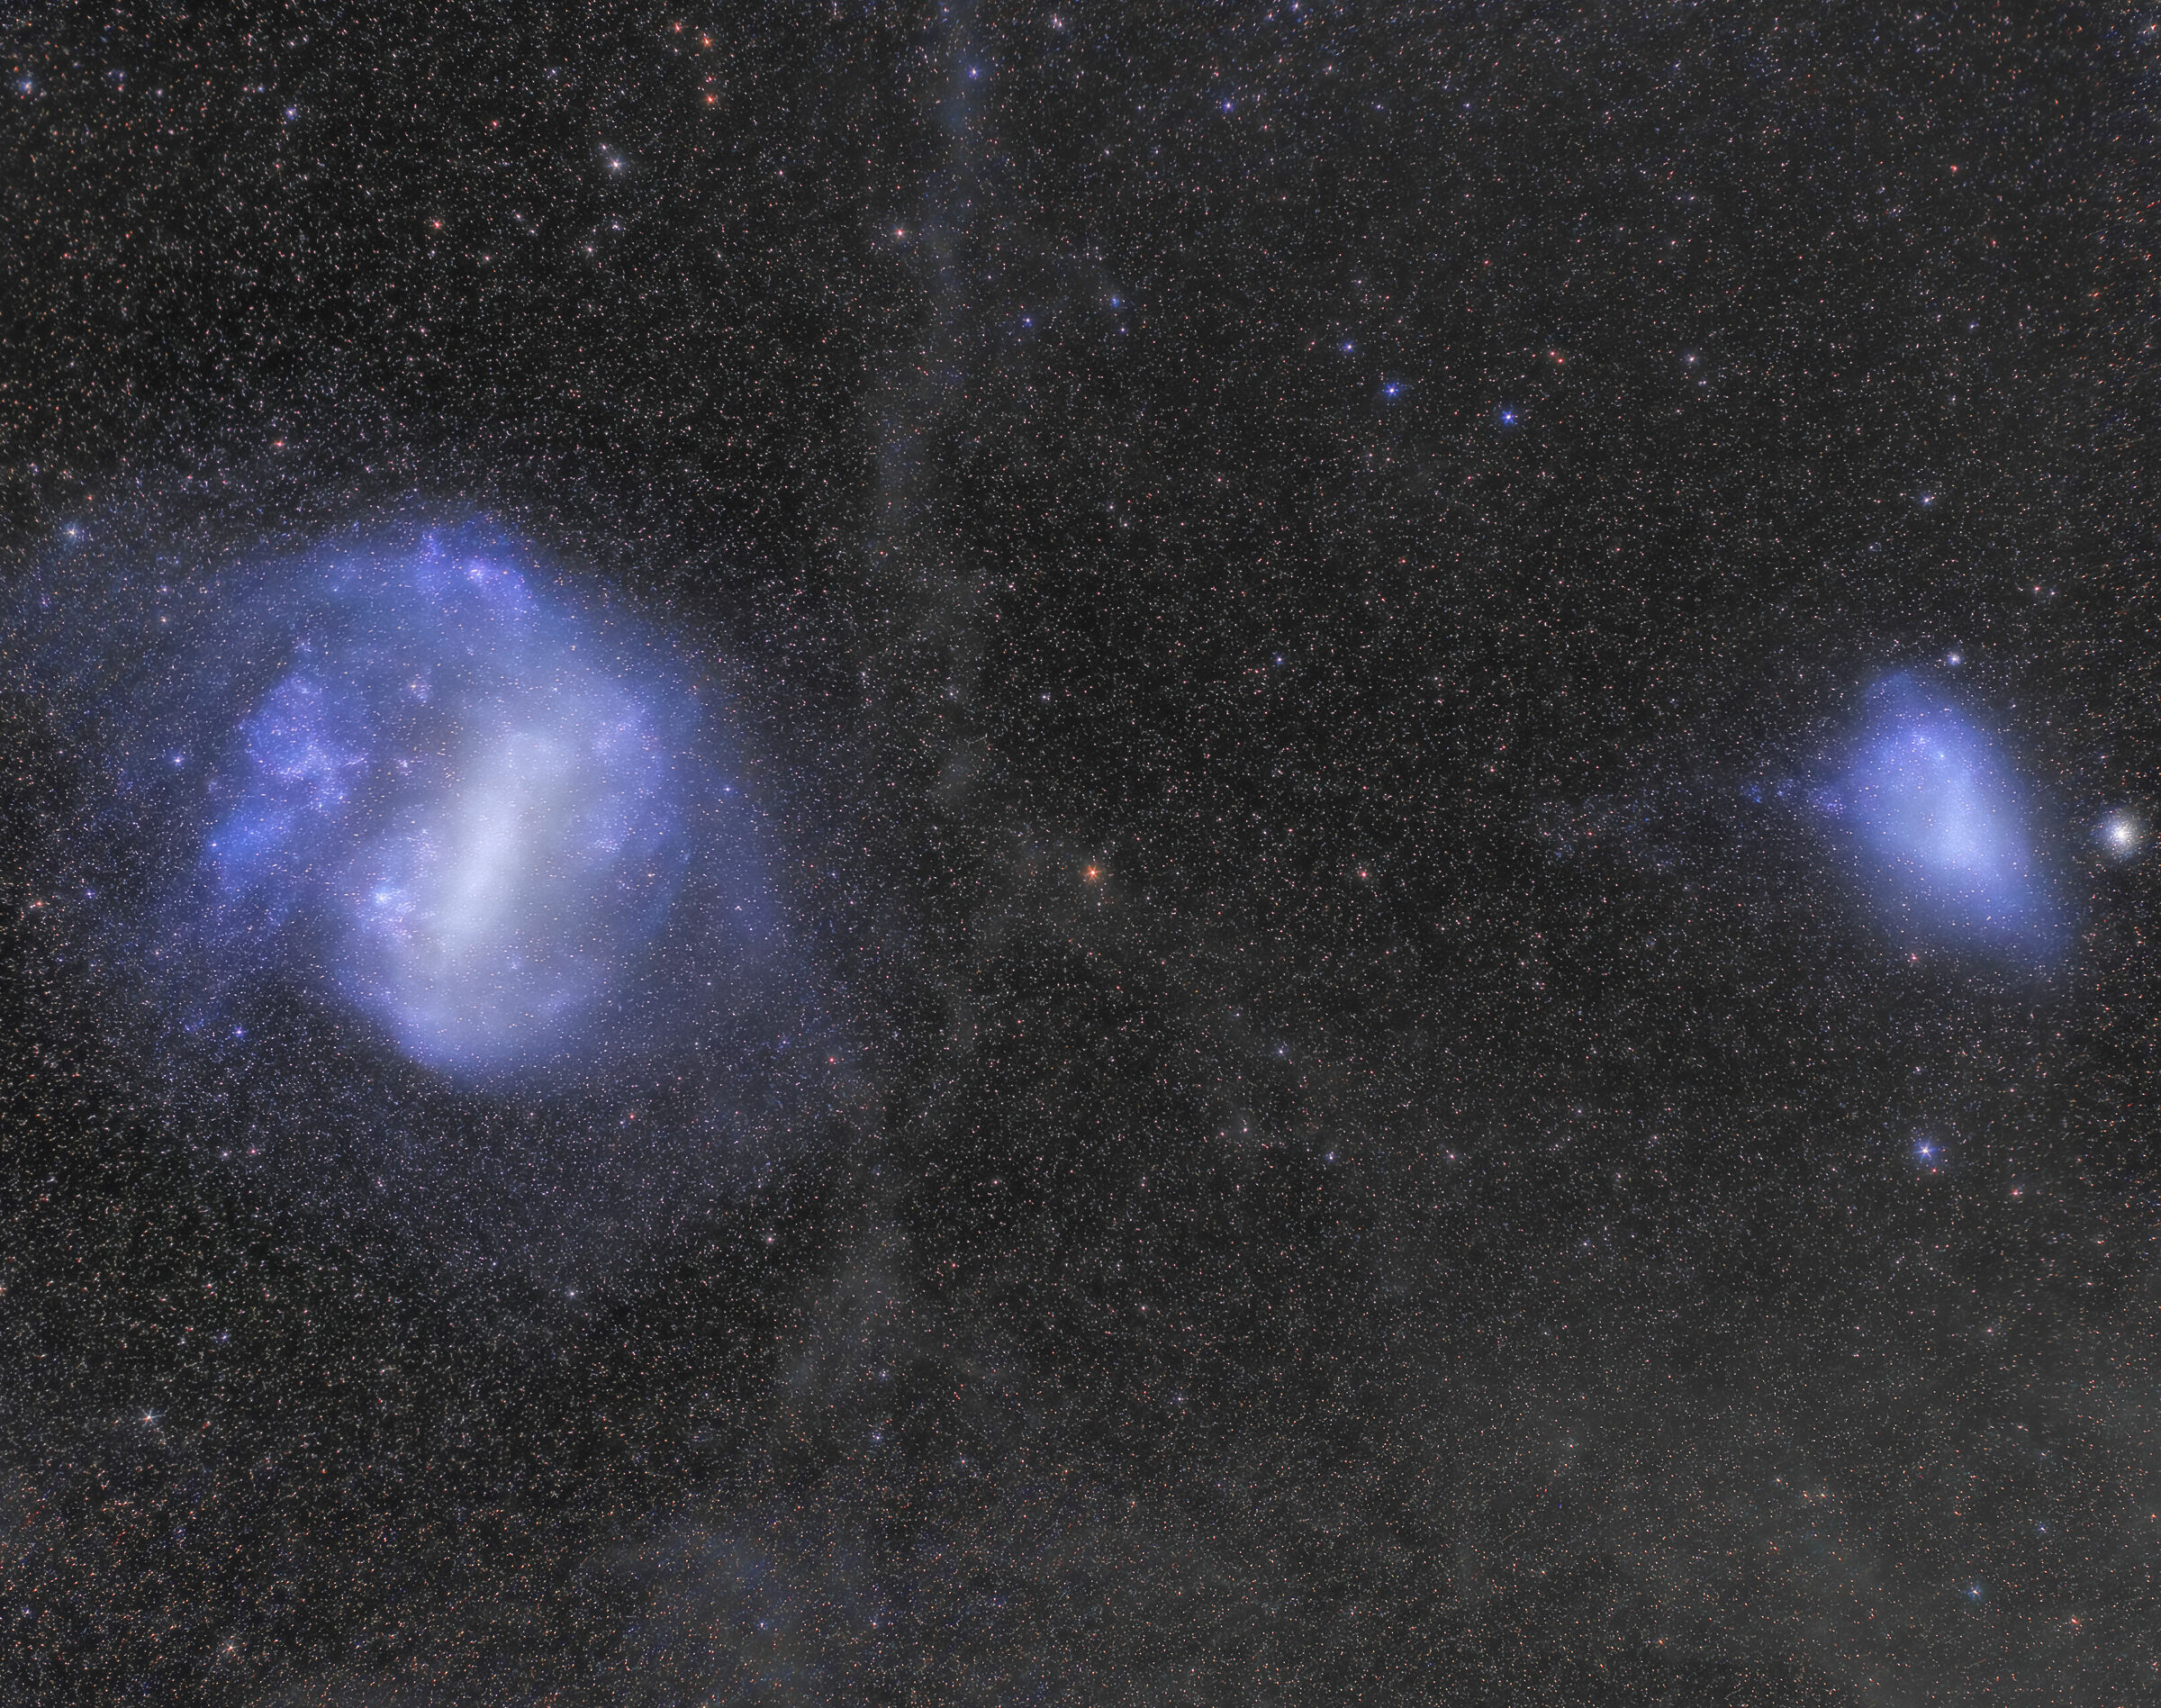 The magellan clouds and galactic cirri...